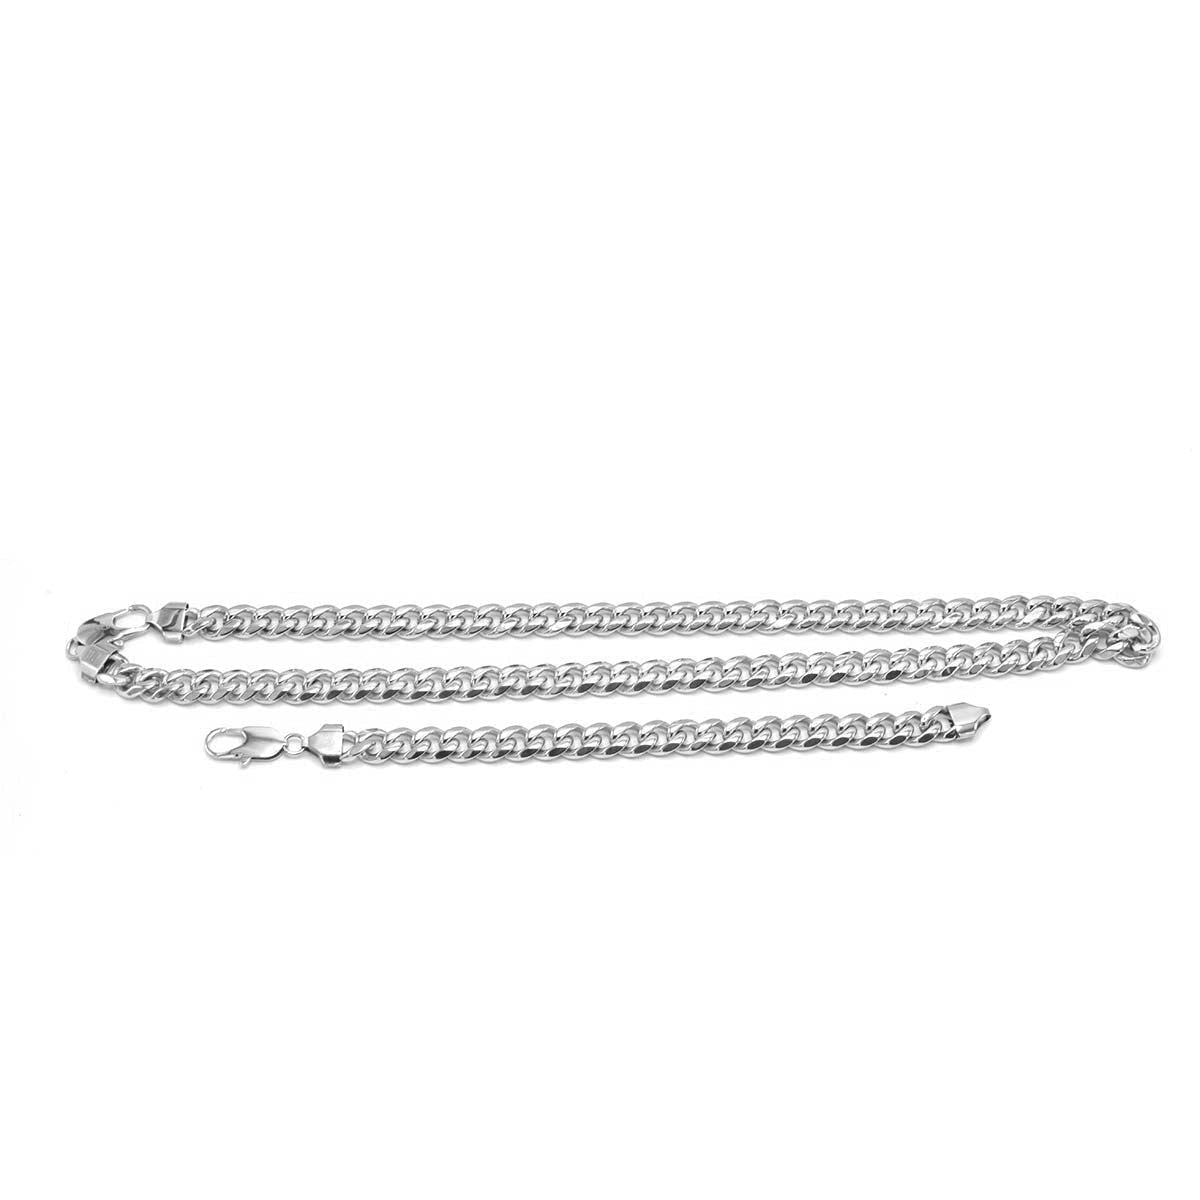 Stainless Steel Chain Bracelet Miami Cuban Set 7mm 24 inch chain 8.5 inch bracelet